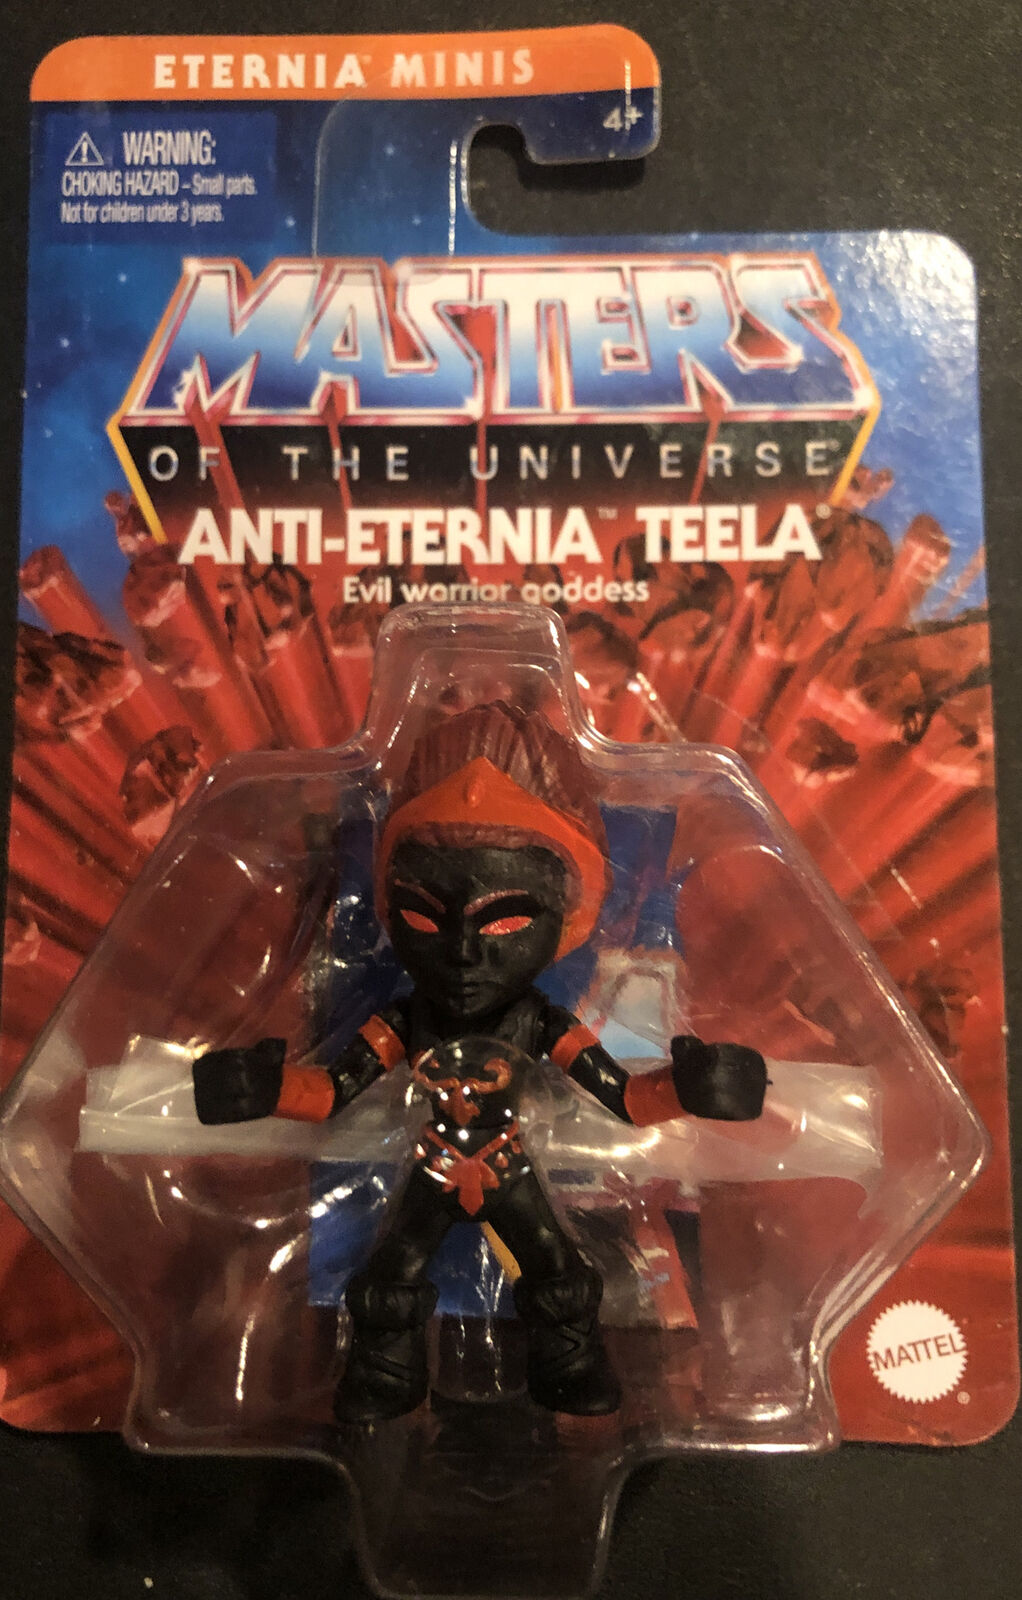 Anti-Eternia Teela Master of the Universe 2" Eternia Minis 2021 MOTU